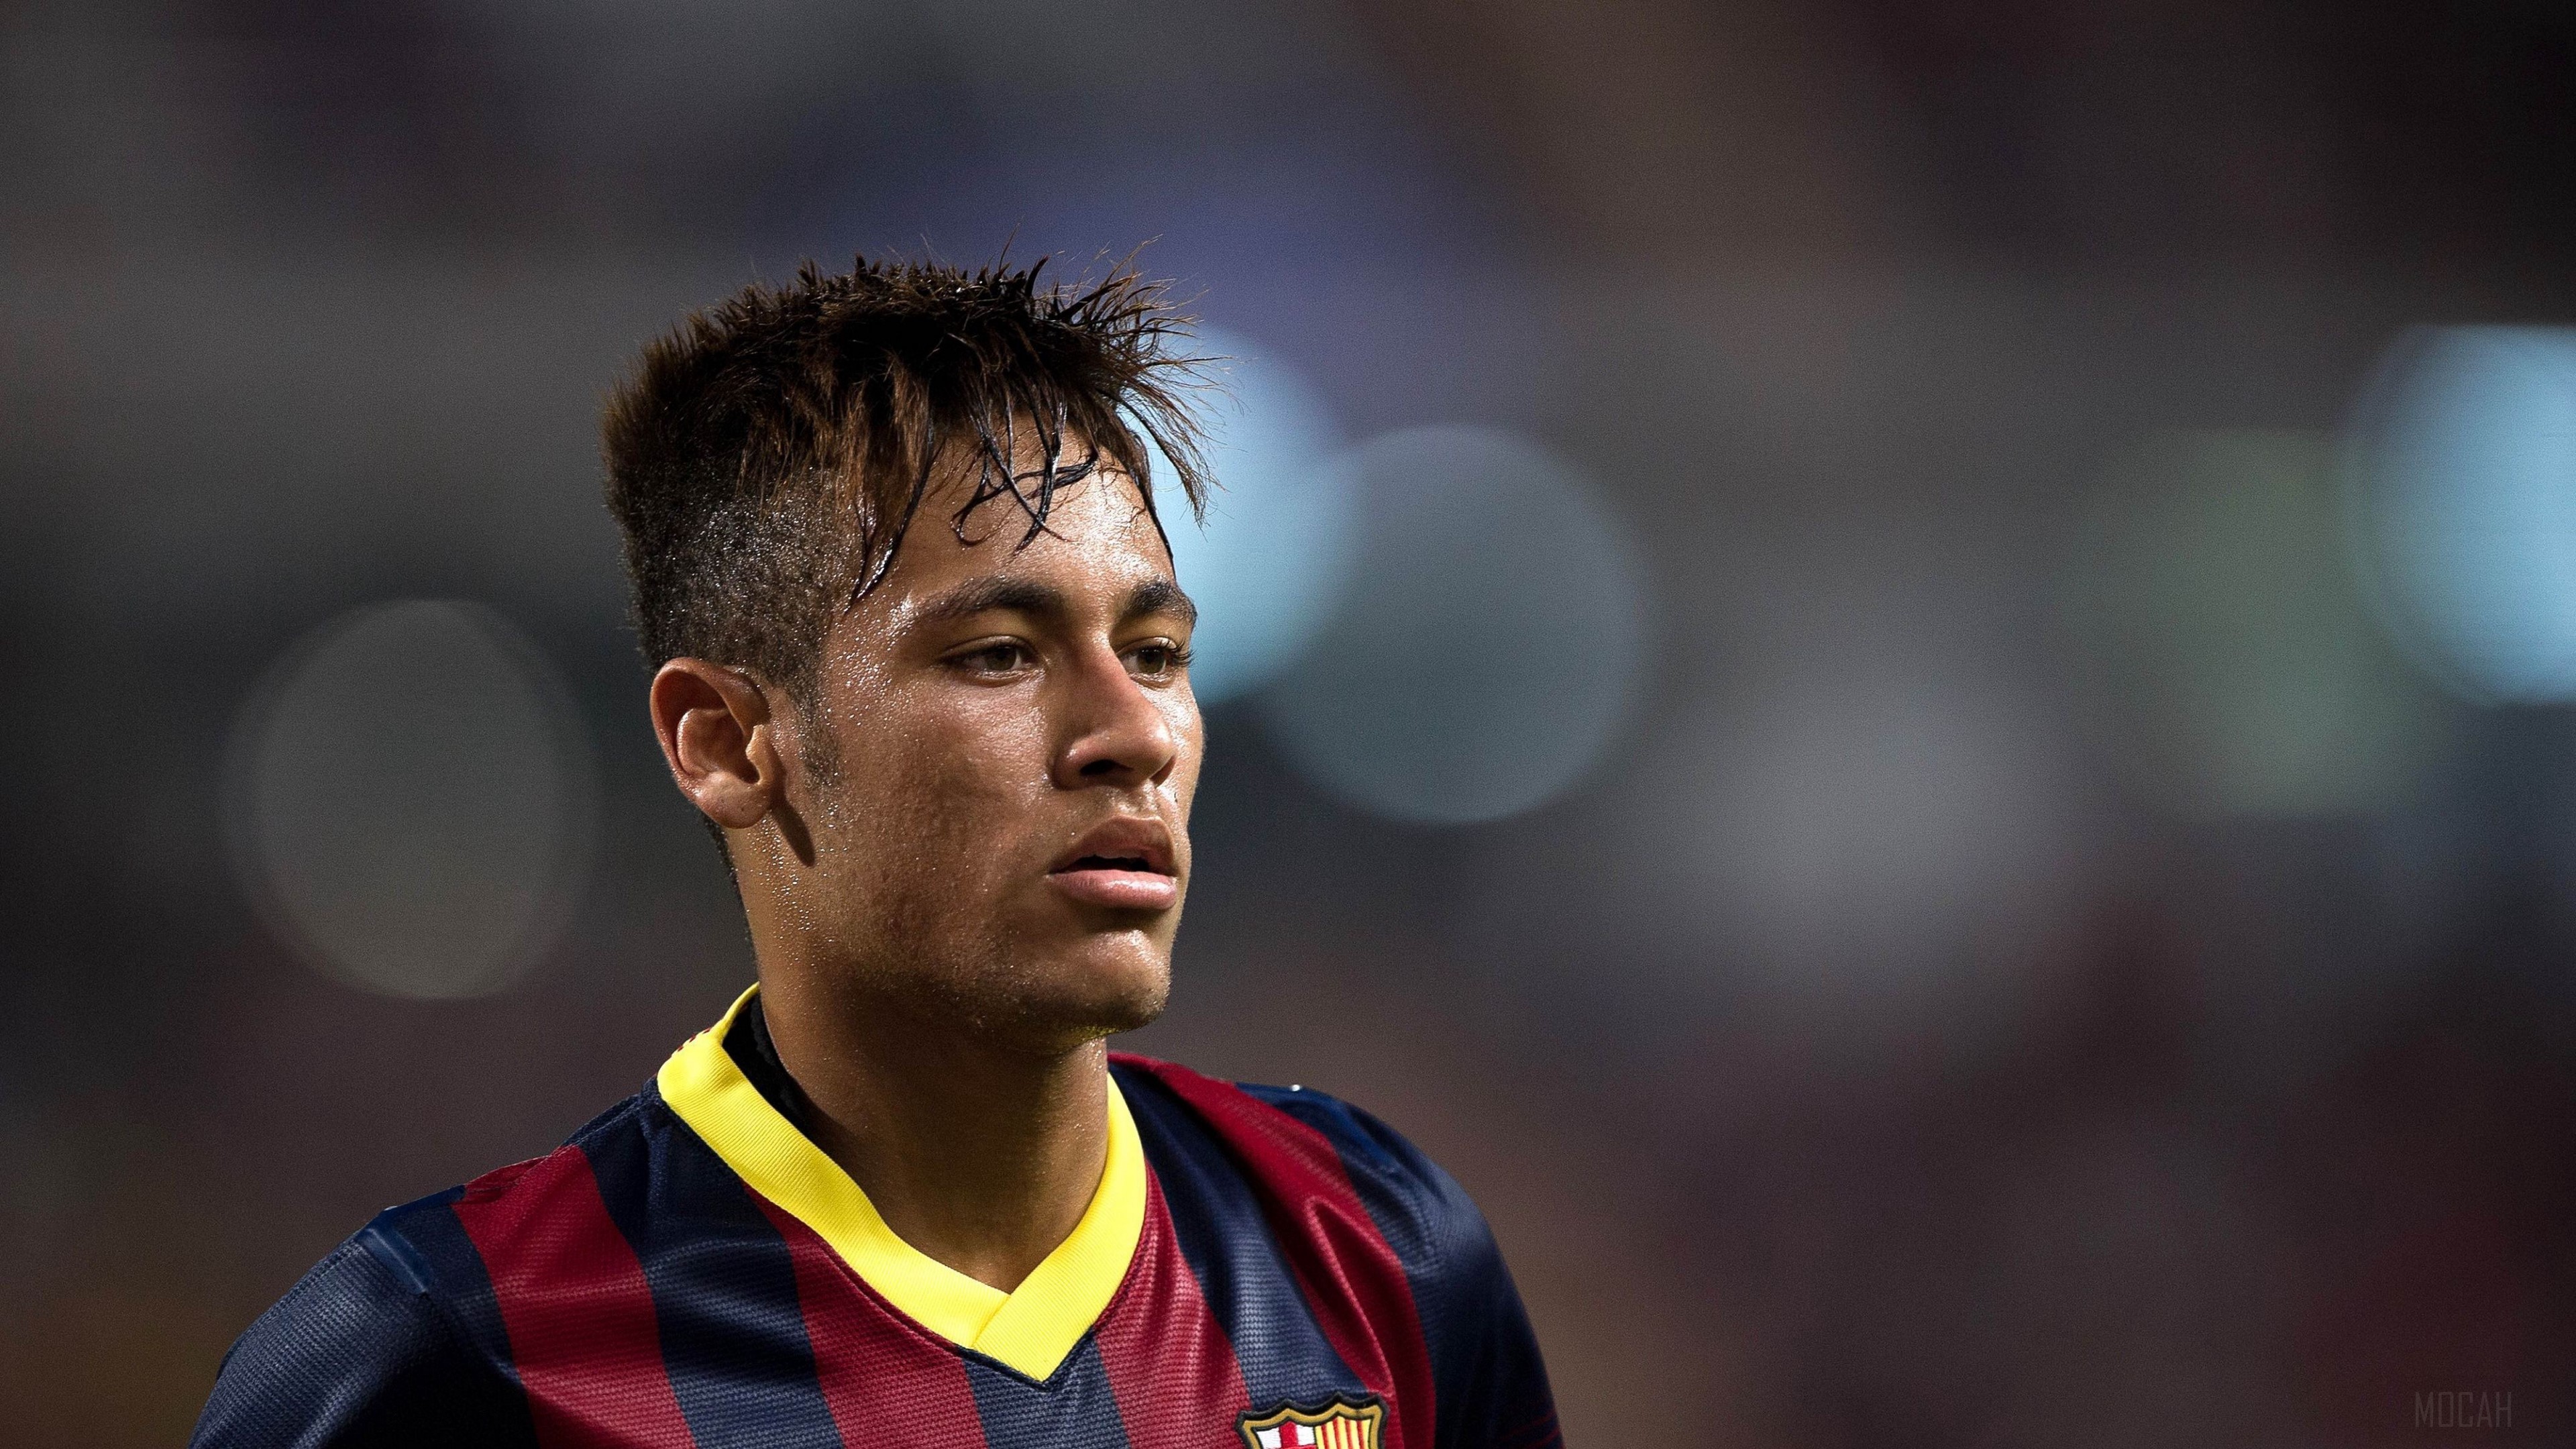 Neymar 1080P, 2k, 4k HD wallpaper, background free download